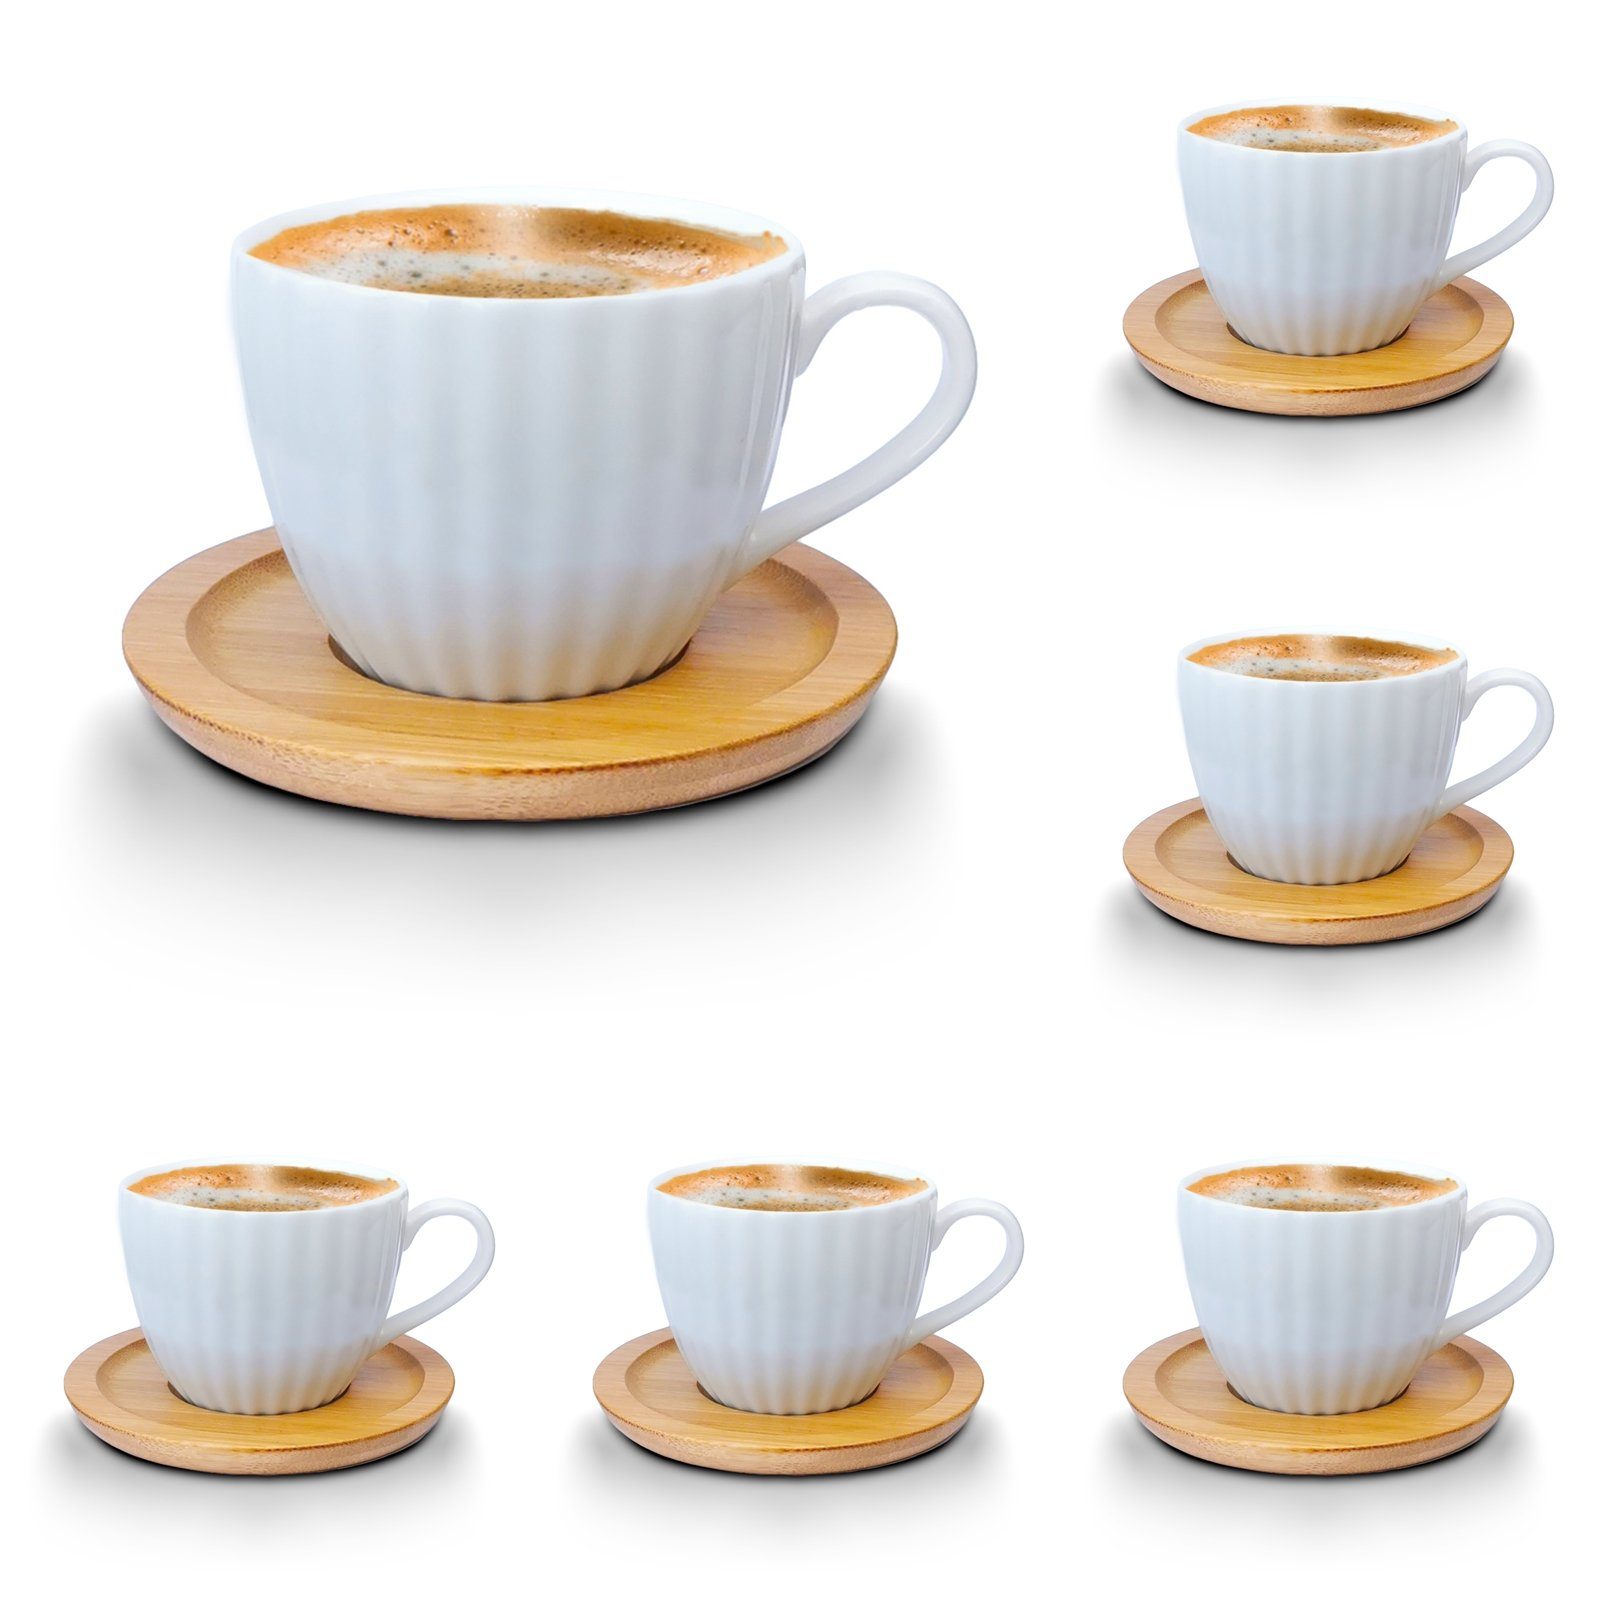 Melody Tasse Porzellan Tassen Set Teeservice Kaffeeservice mit Untertassen 12-Teilig, Porzellan, Espressotassen, 6er-Set, mit Untertassen Mod1